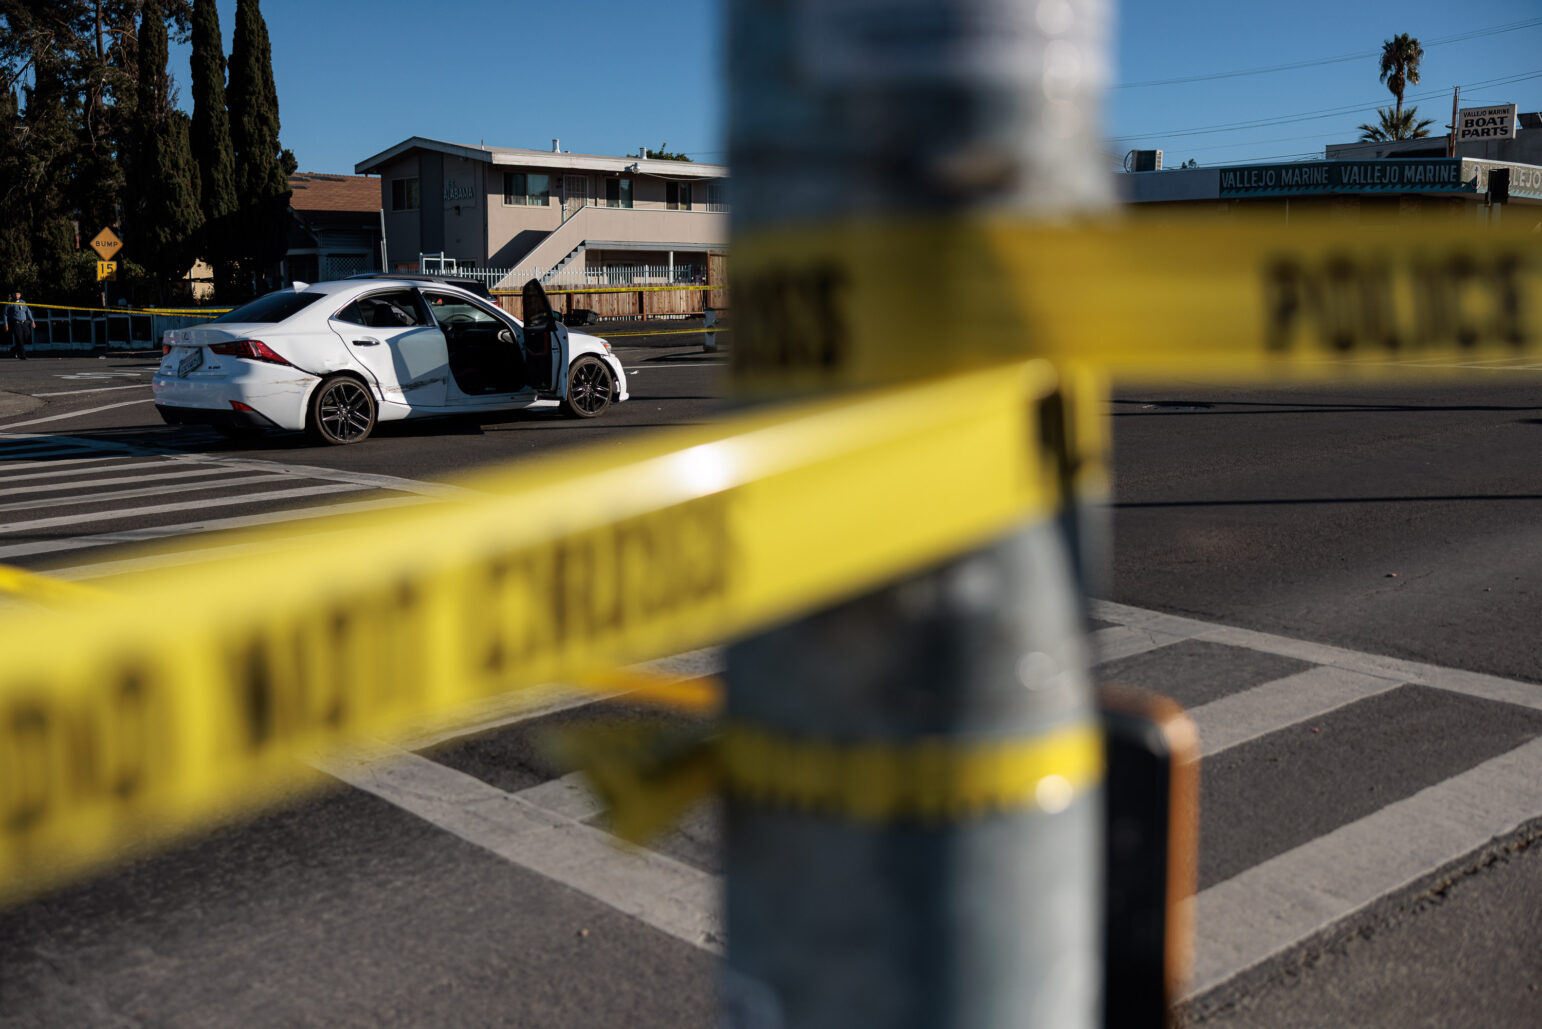 A white Lexus behind crime scene tape